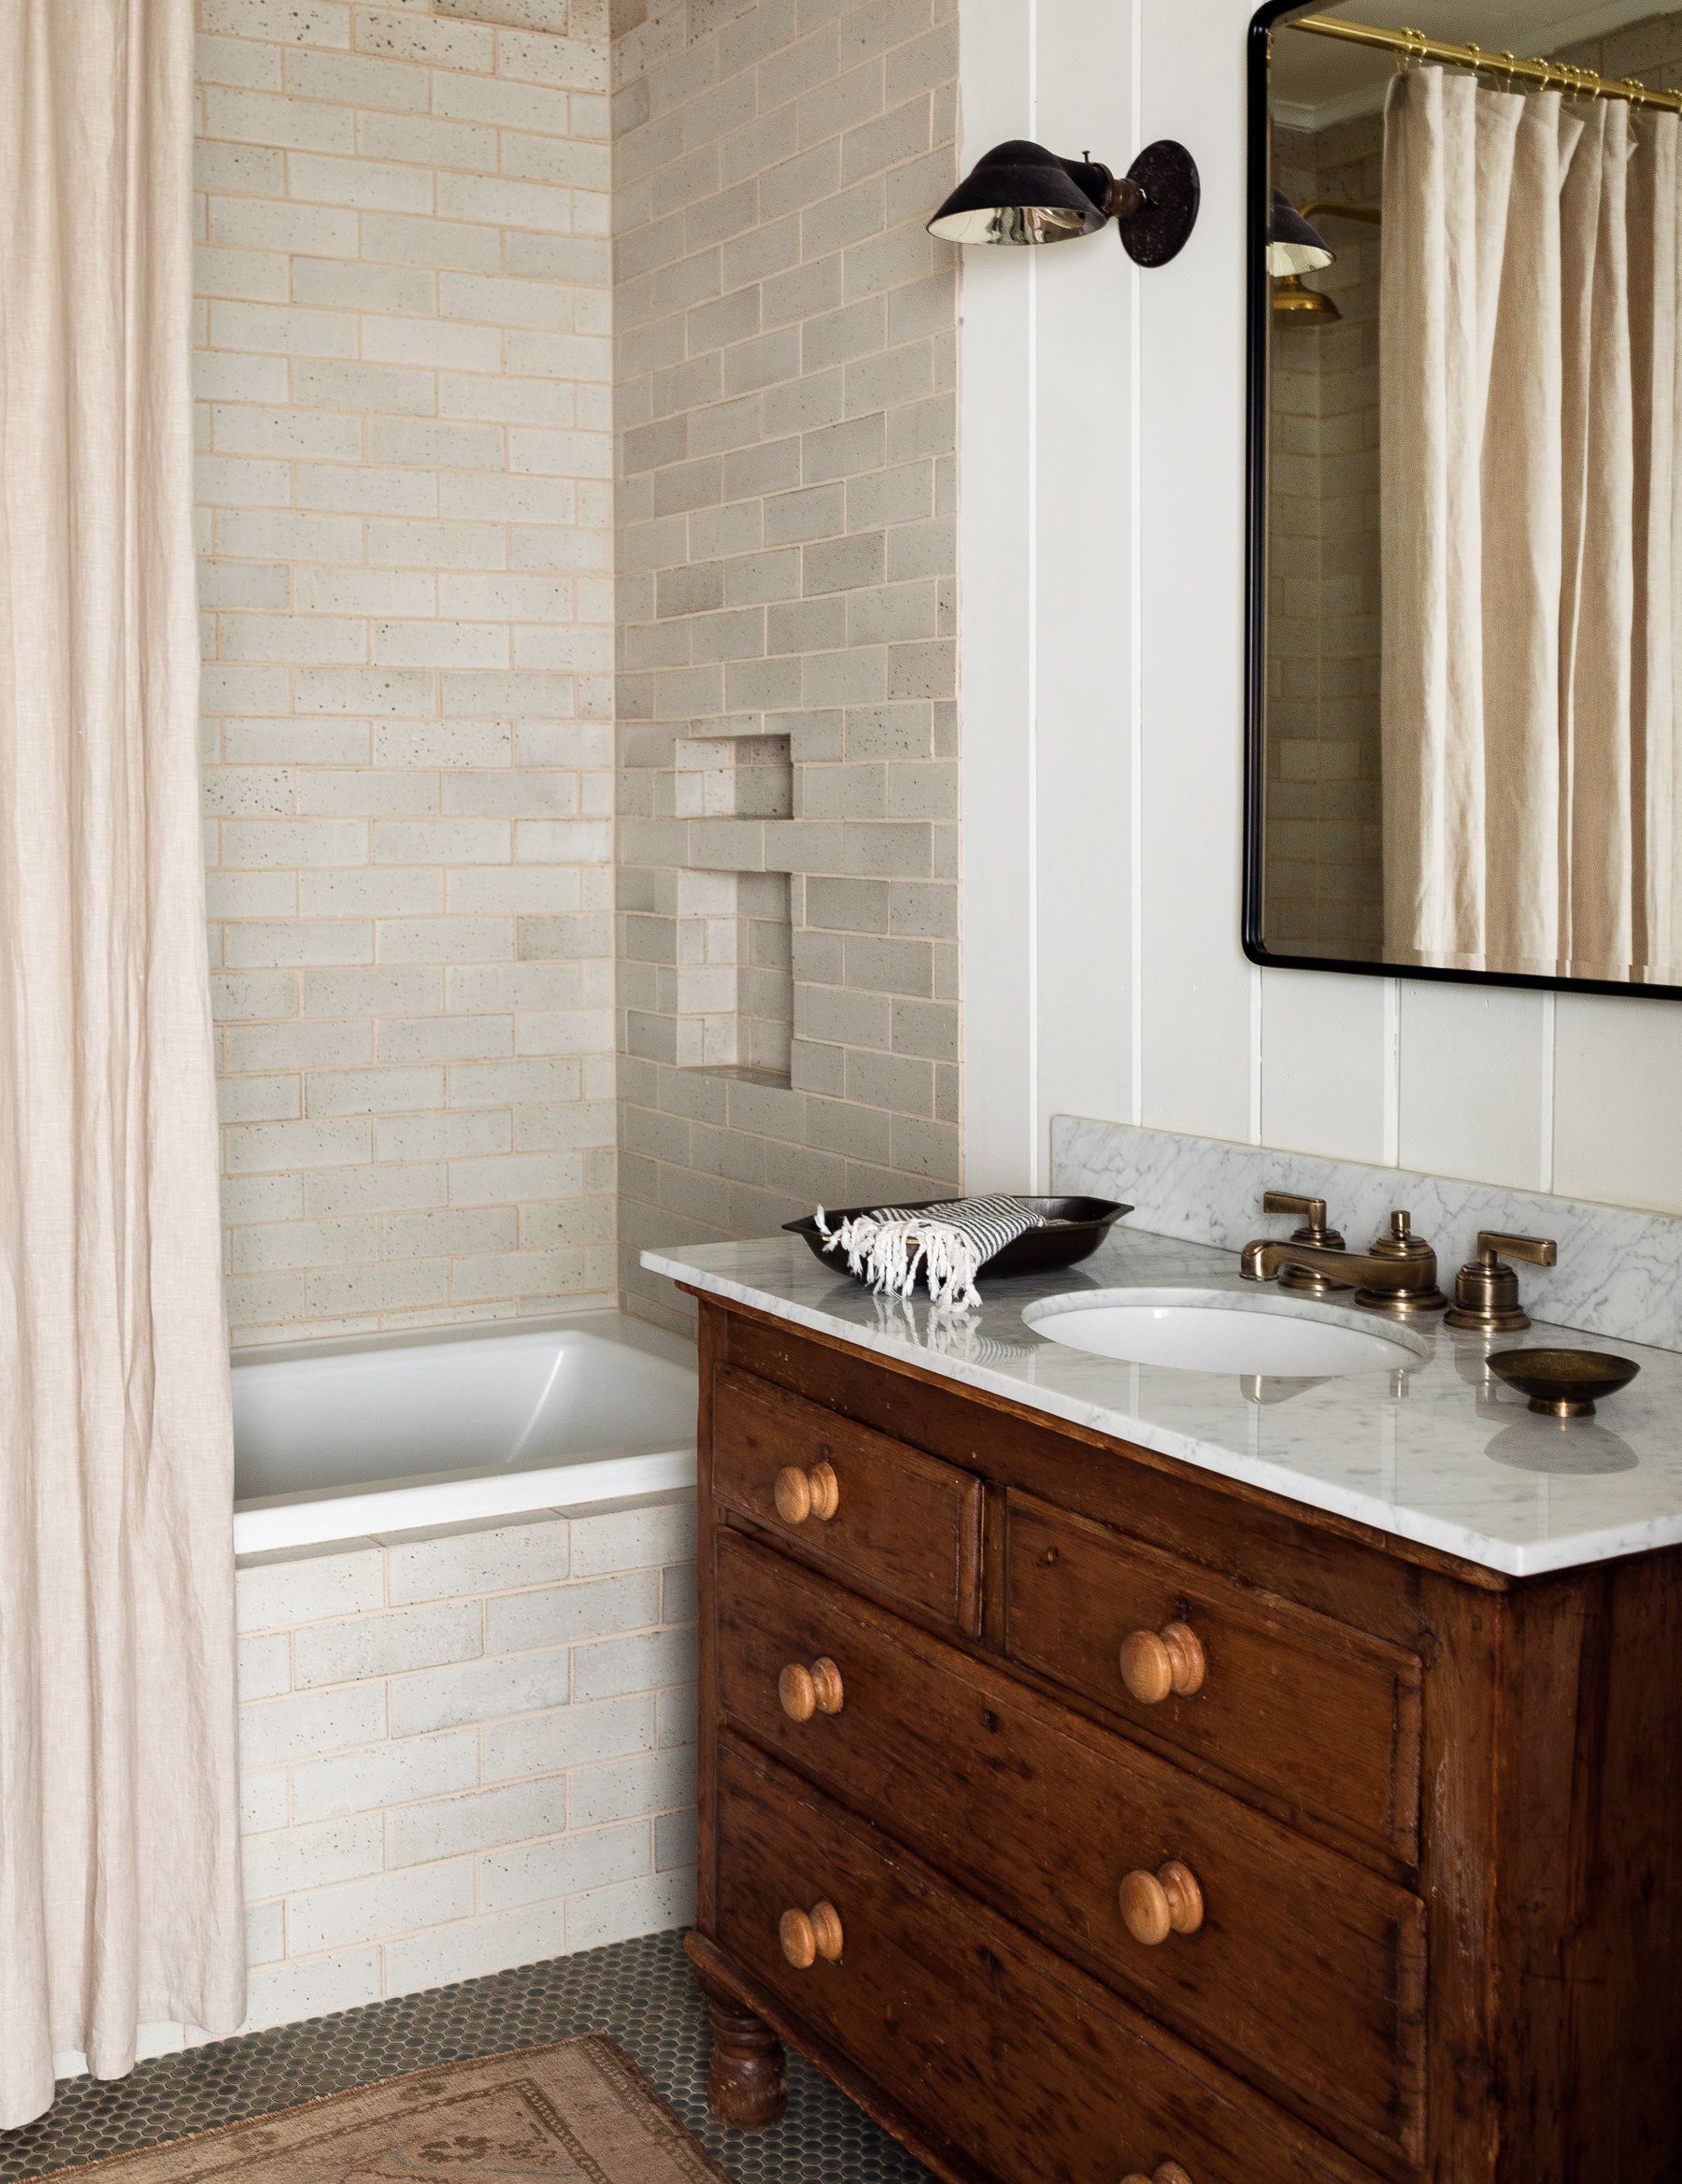 60 bathroom tile ideas - bath tile backsplash and floor designs